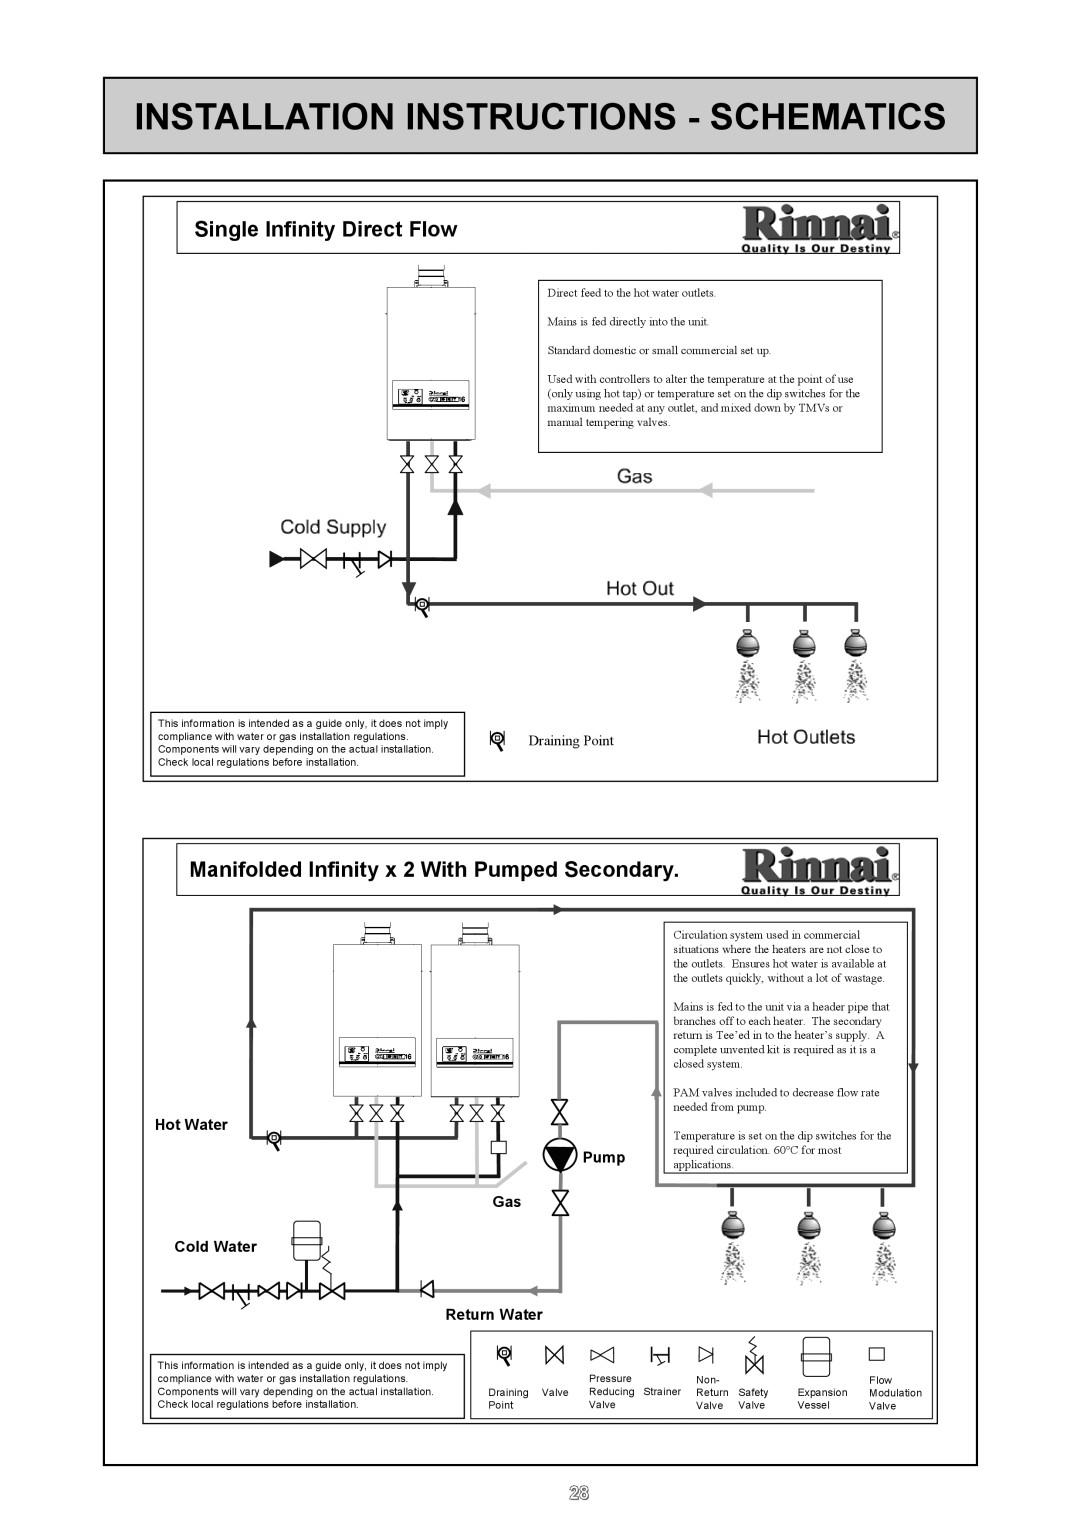 Rinnai REU - 16 FUA - E Installation Instructions - Schematics, Single Infinity Direct Flow, Draining Point, Pump Gas 